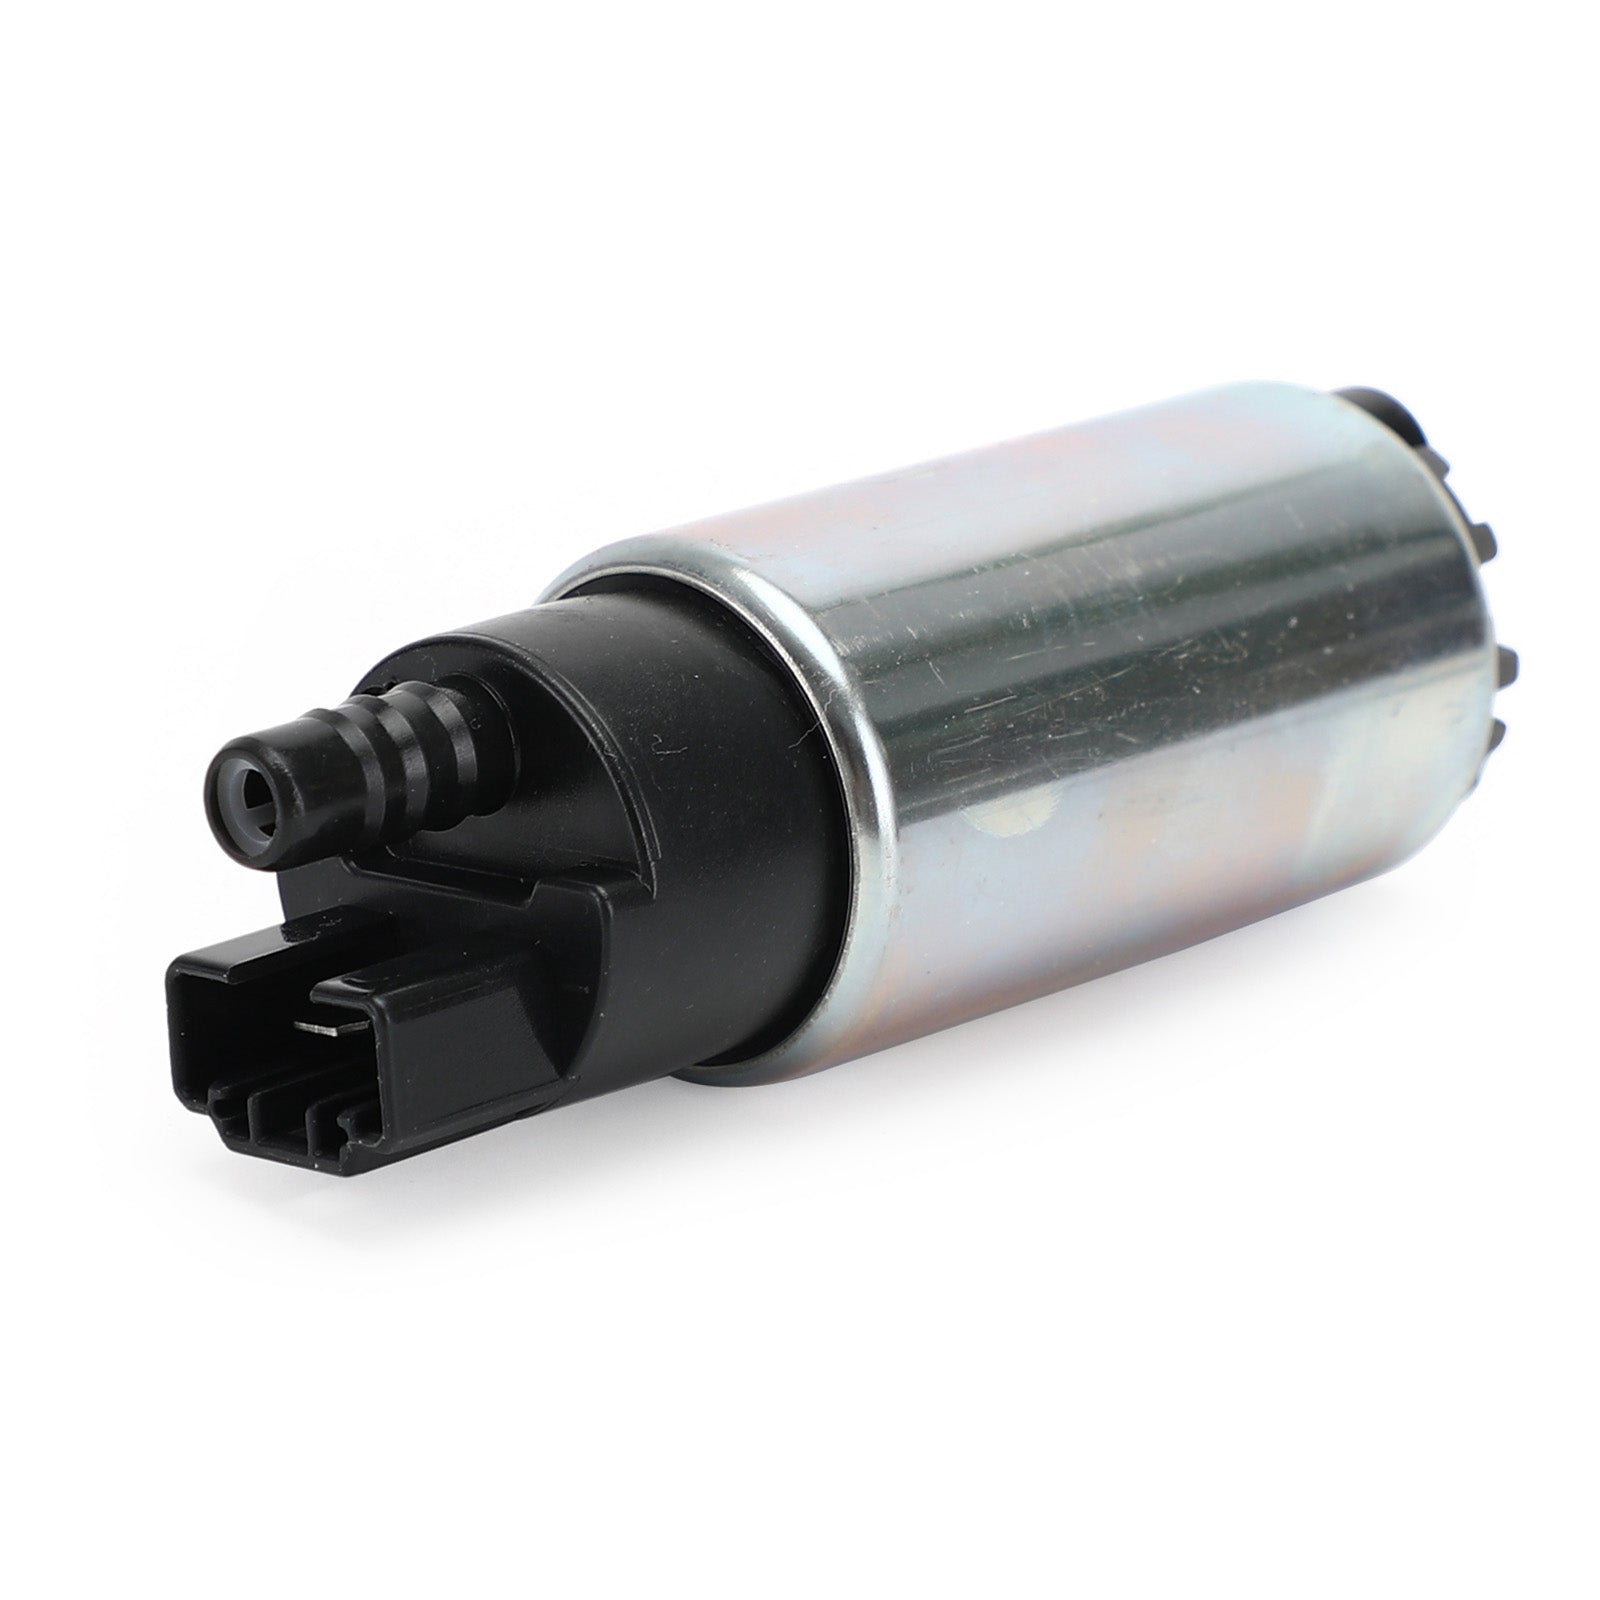 Bomba de gasolina + filtro + manguera + kit para Ducati Hypermotard 796 1100 S EVO 08-12 Genérico